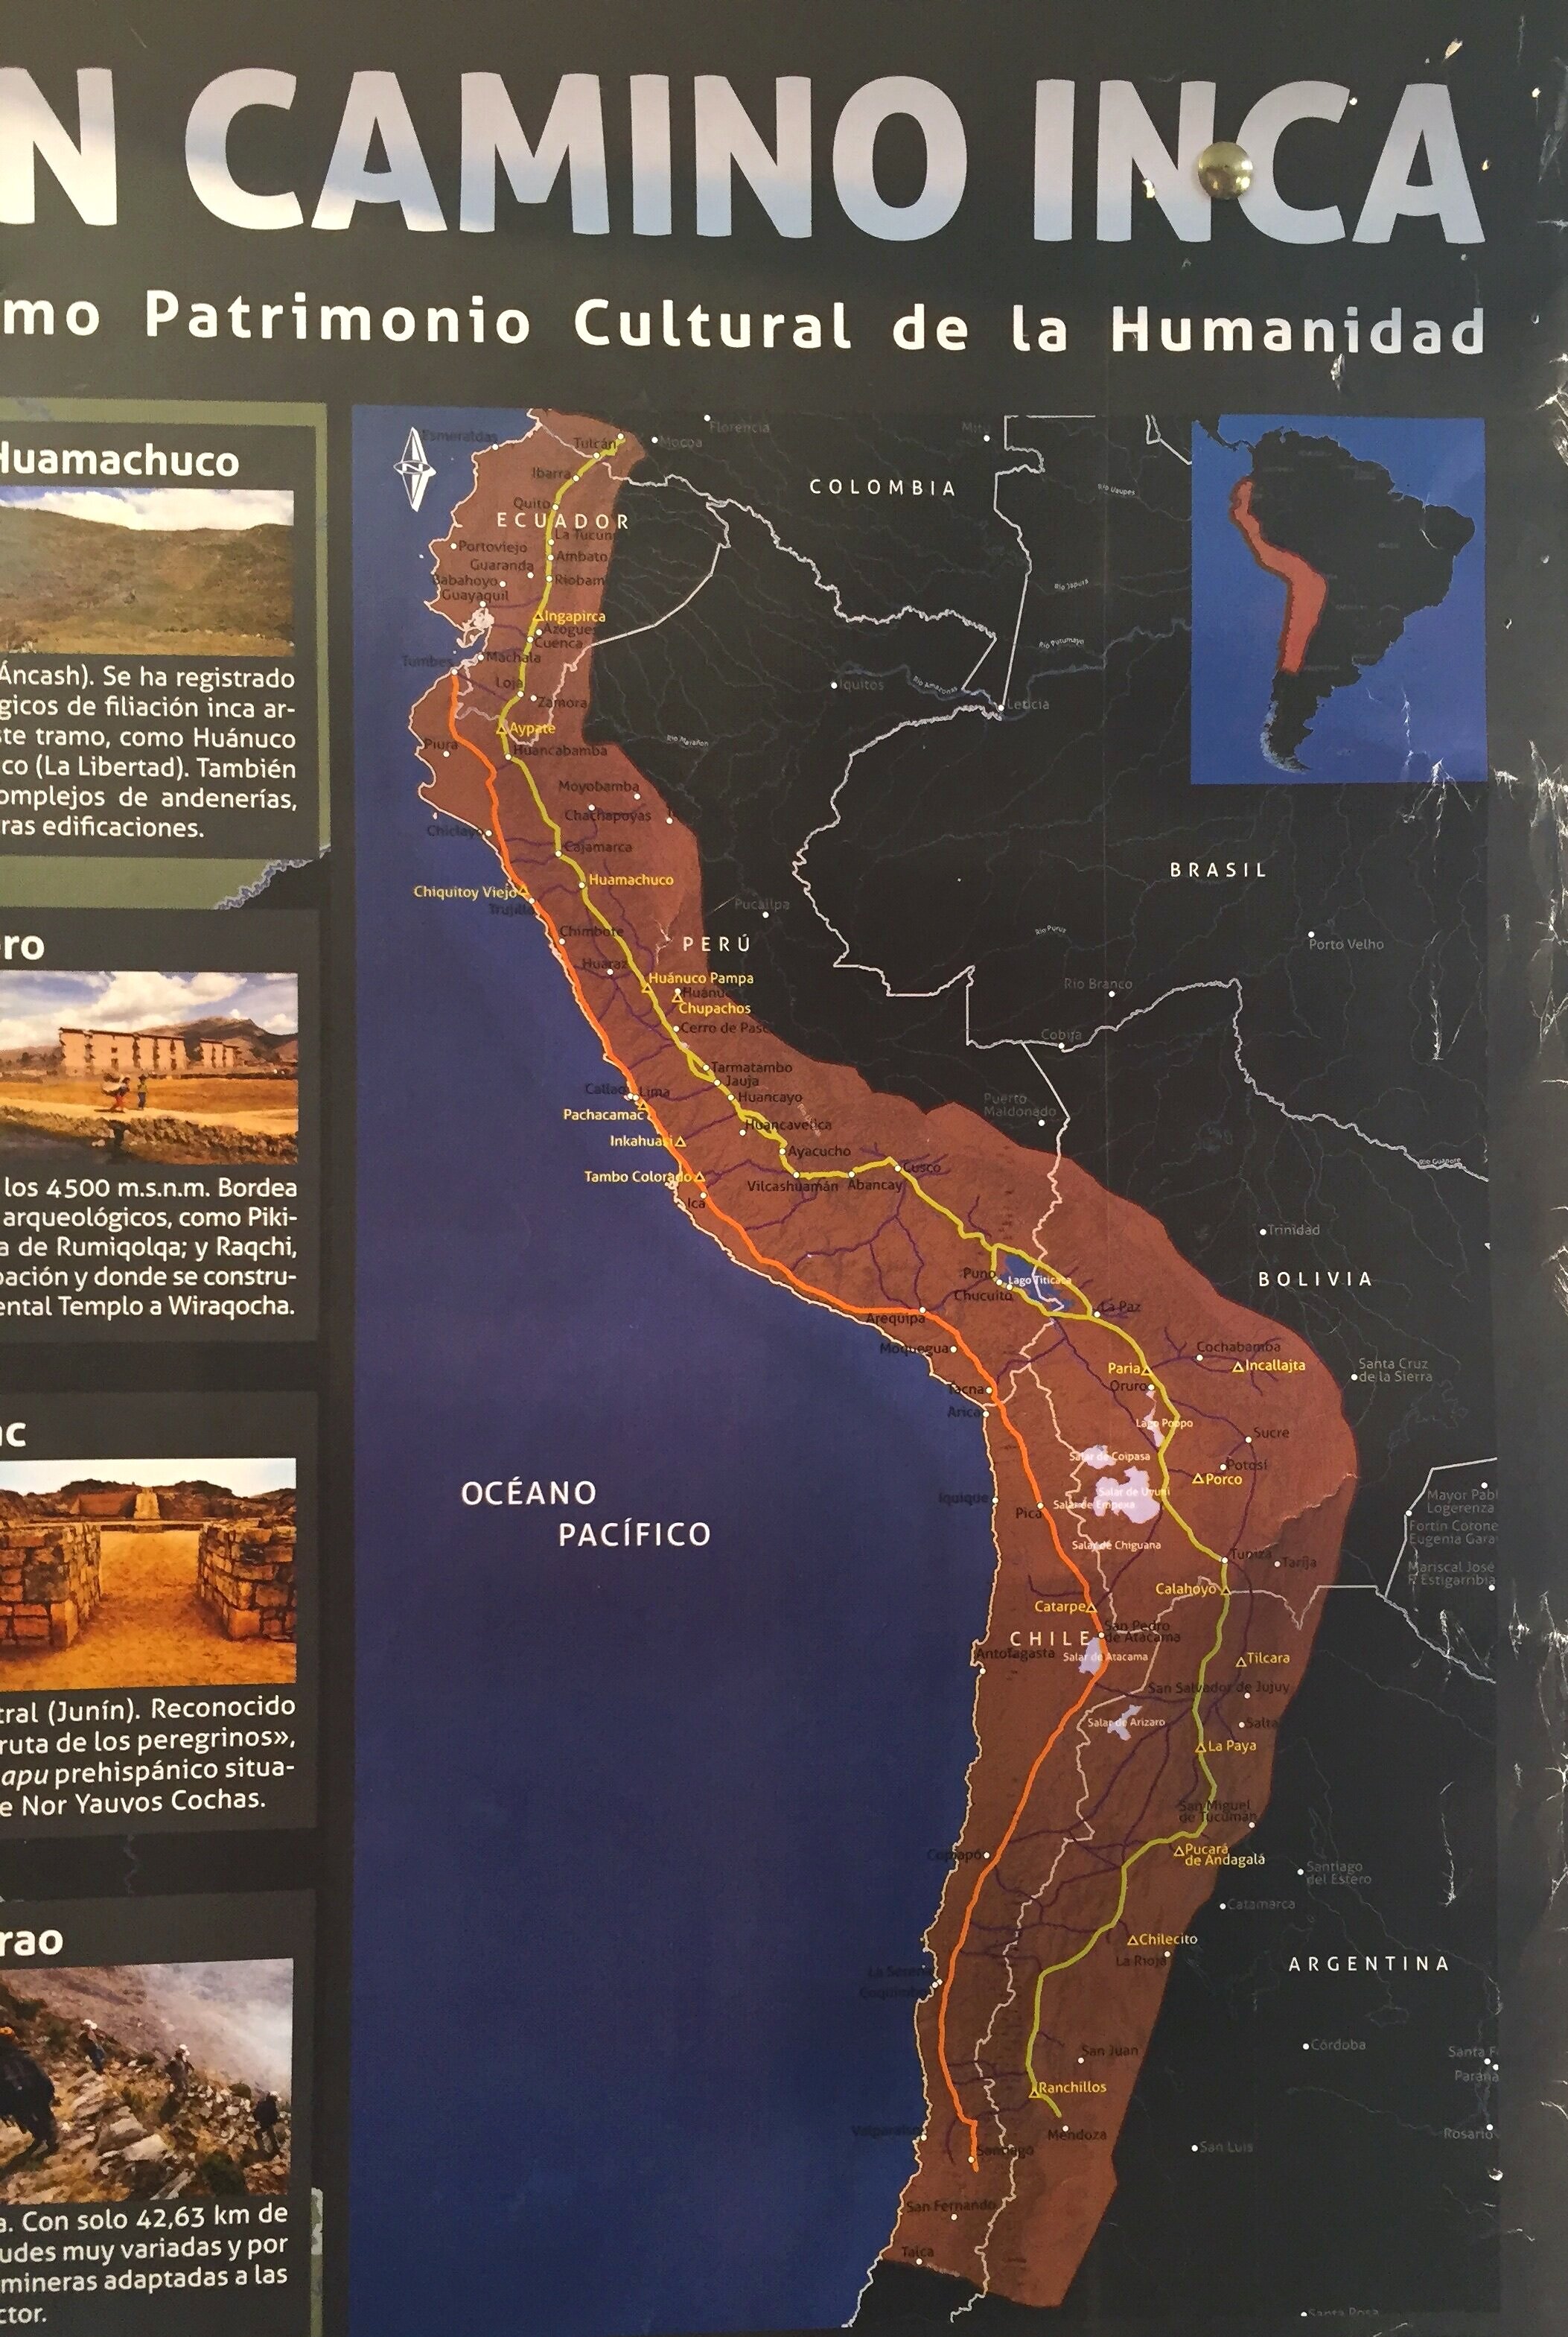 Inca Empire in Peru, South America - G Adventures